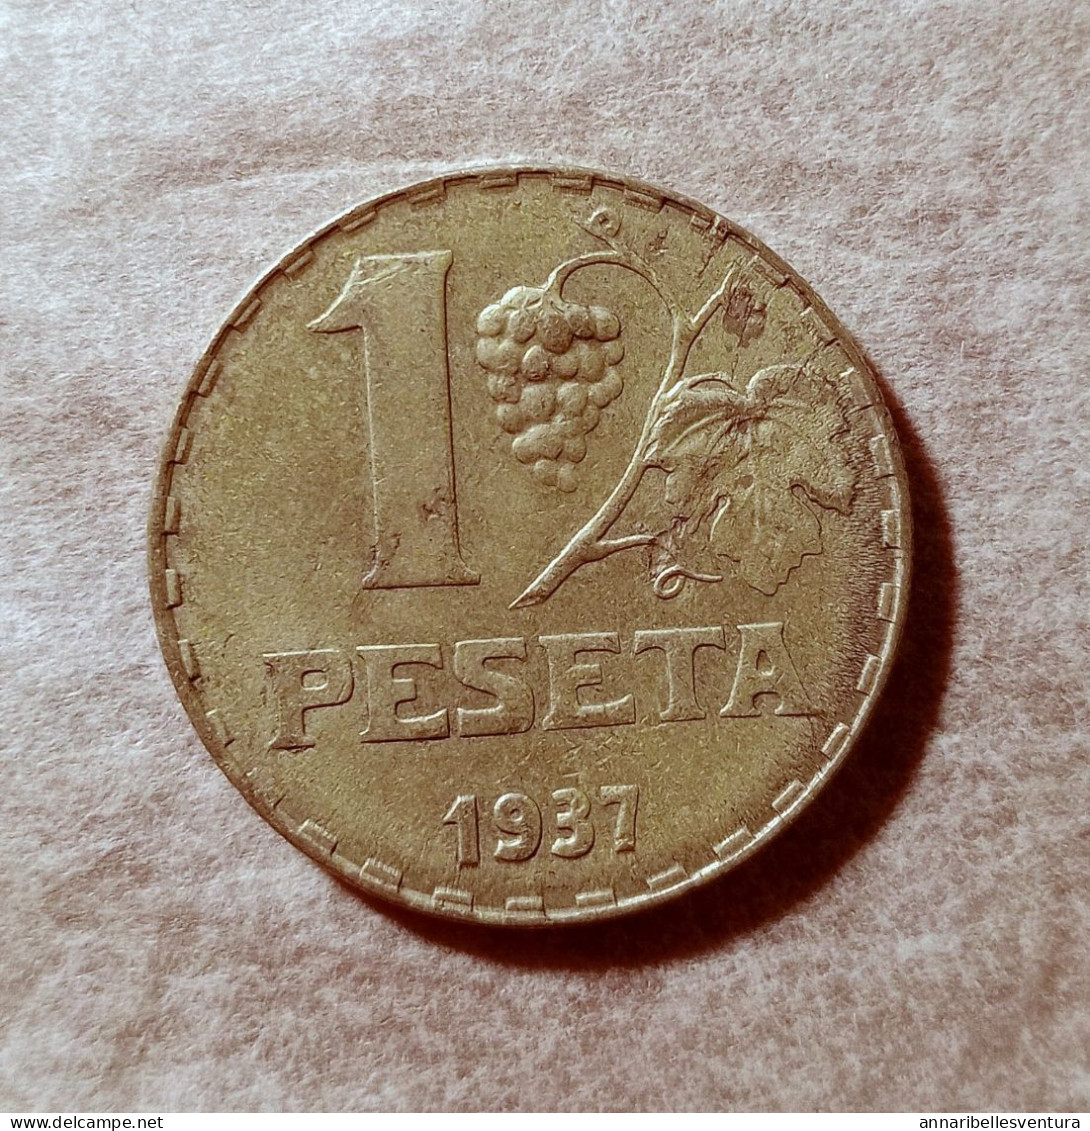 1 PESETA, ALFONSO XIII 1937. - Zona Repubblicana